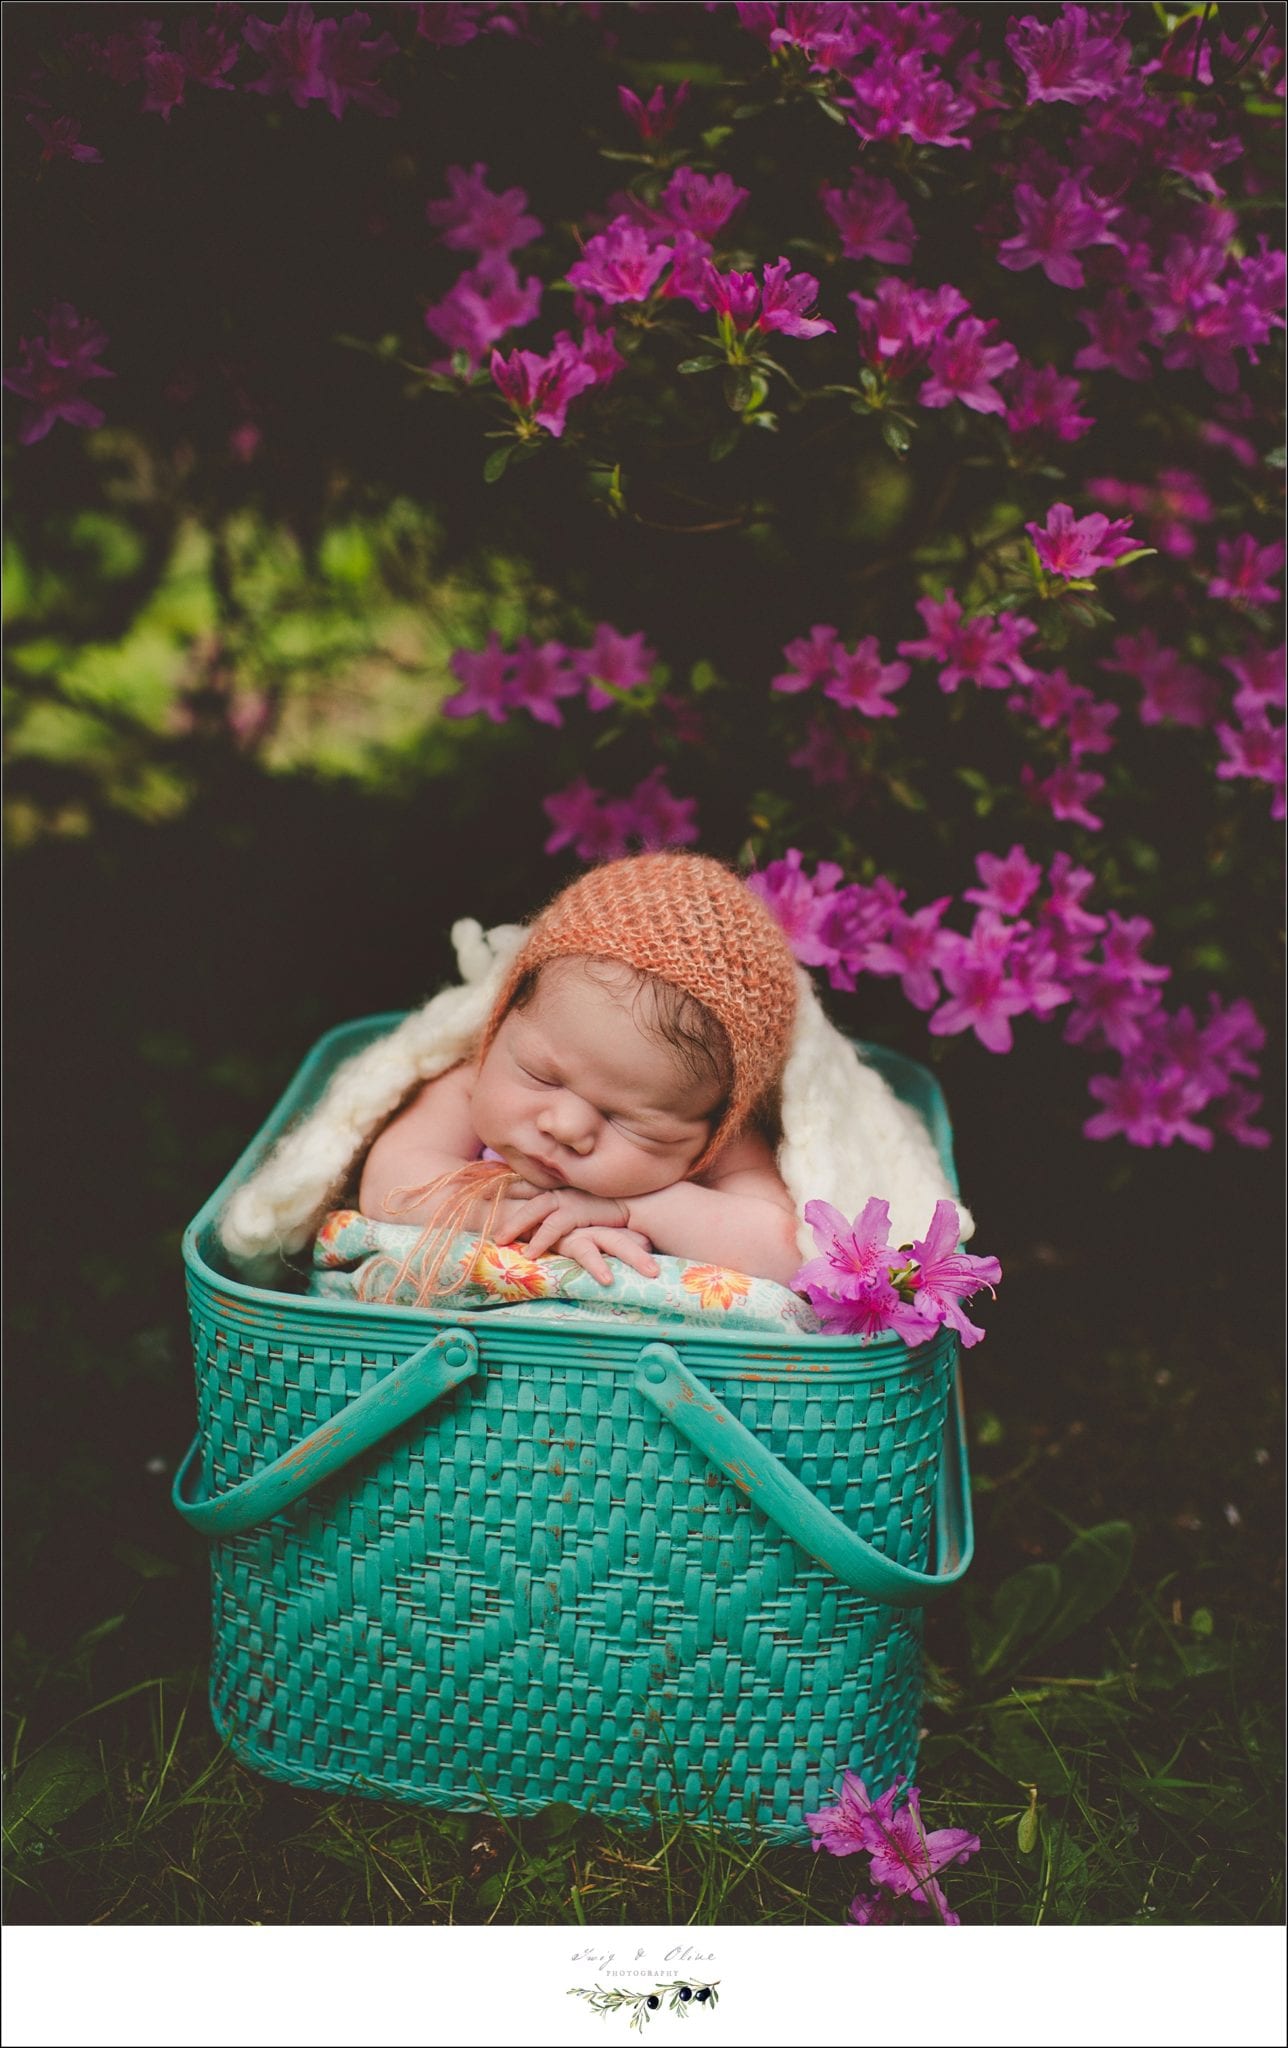 baskets, bonnets, blankets, hair flowers, babies, newborns, rustic Washington backdrop